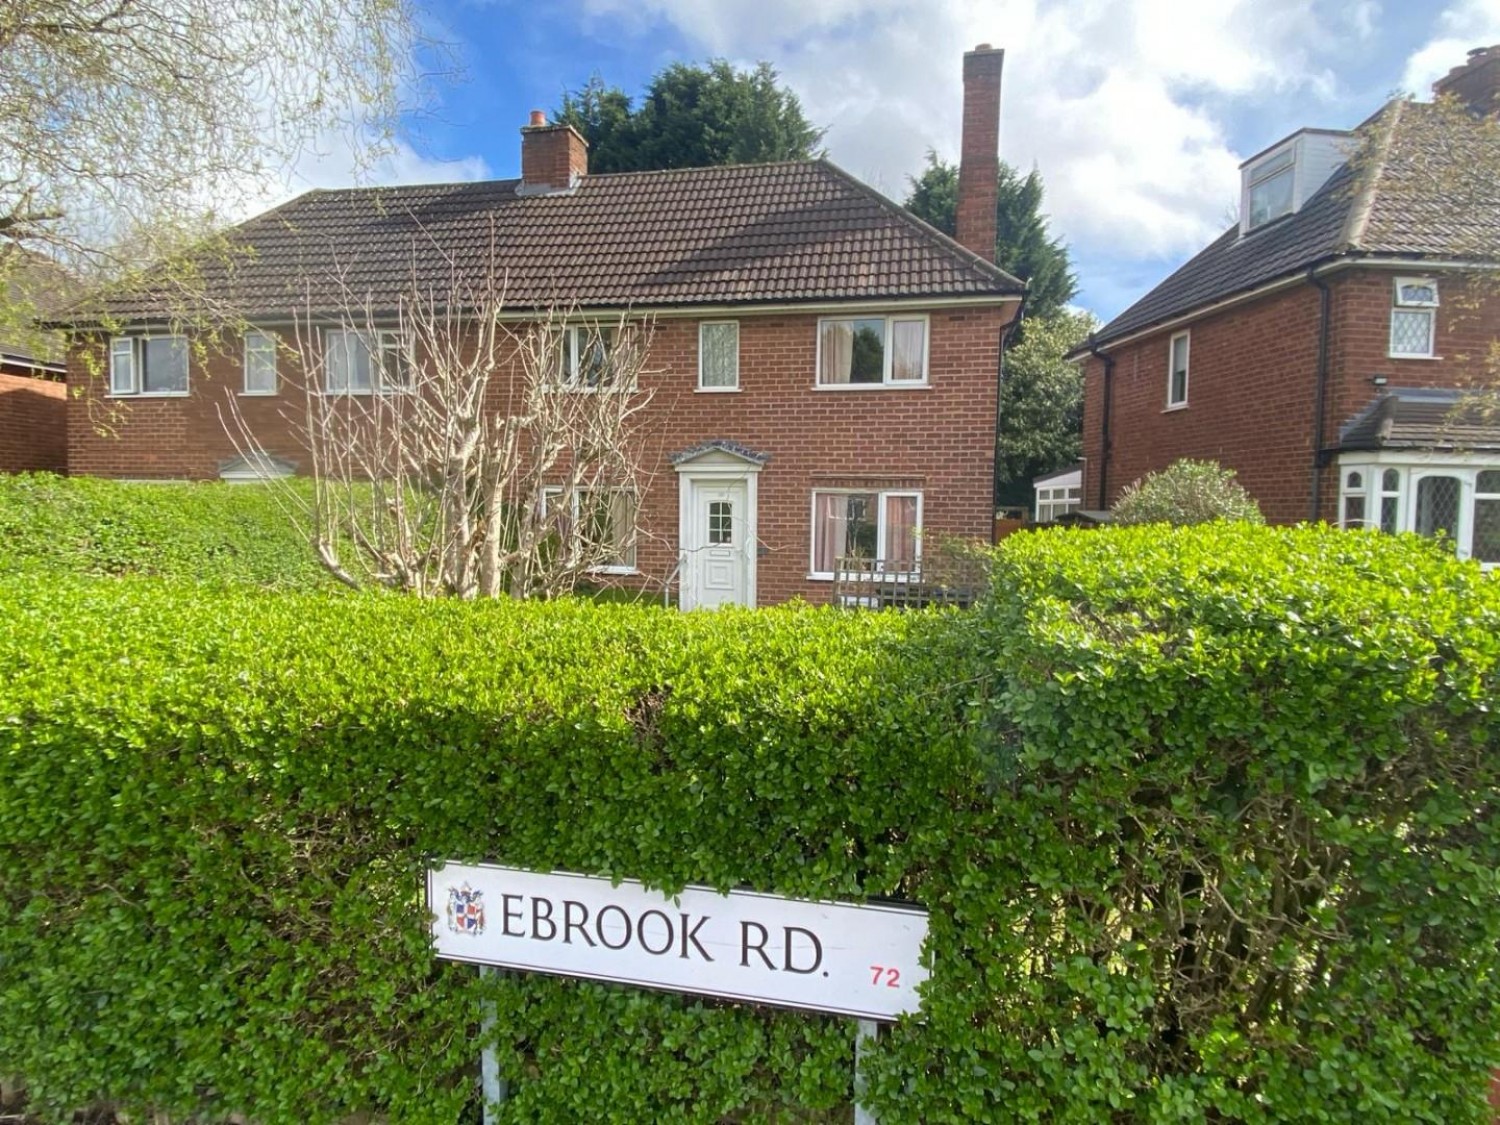 Ebrook Road, Sutton Coldfield